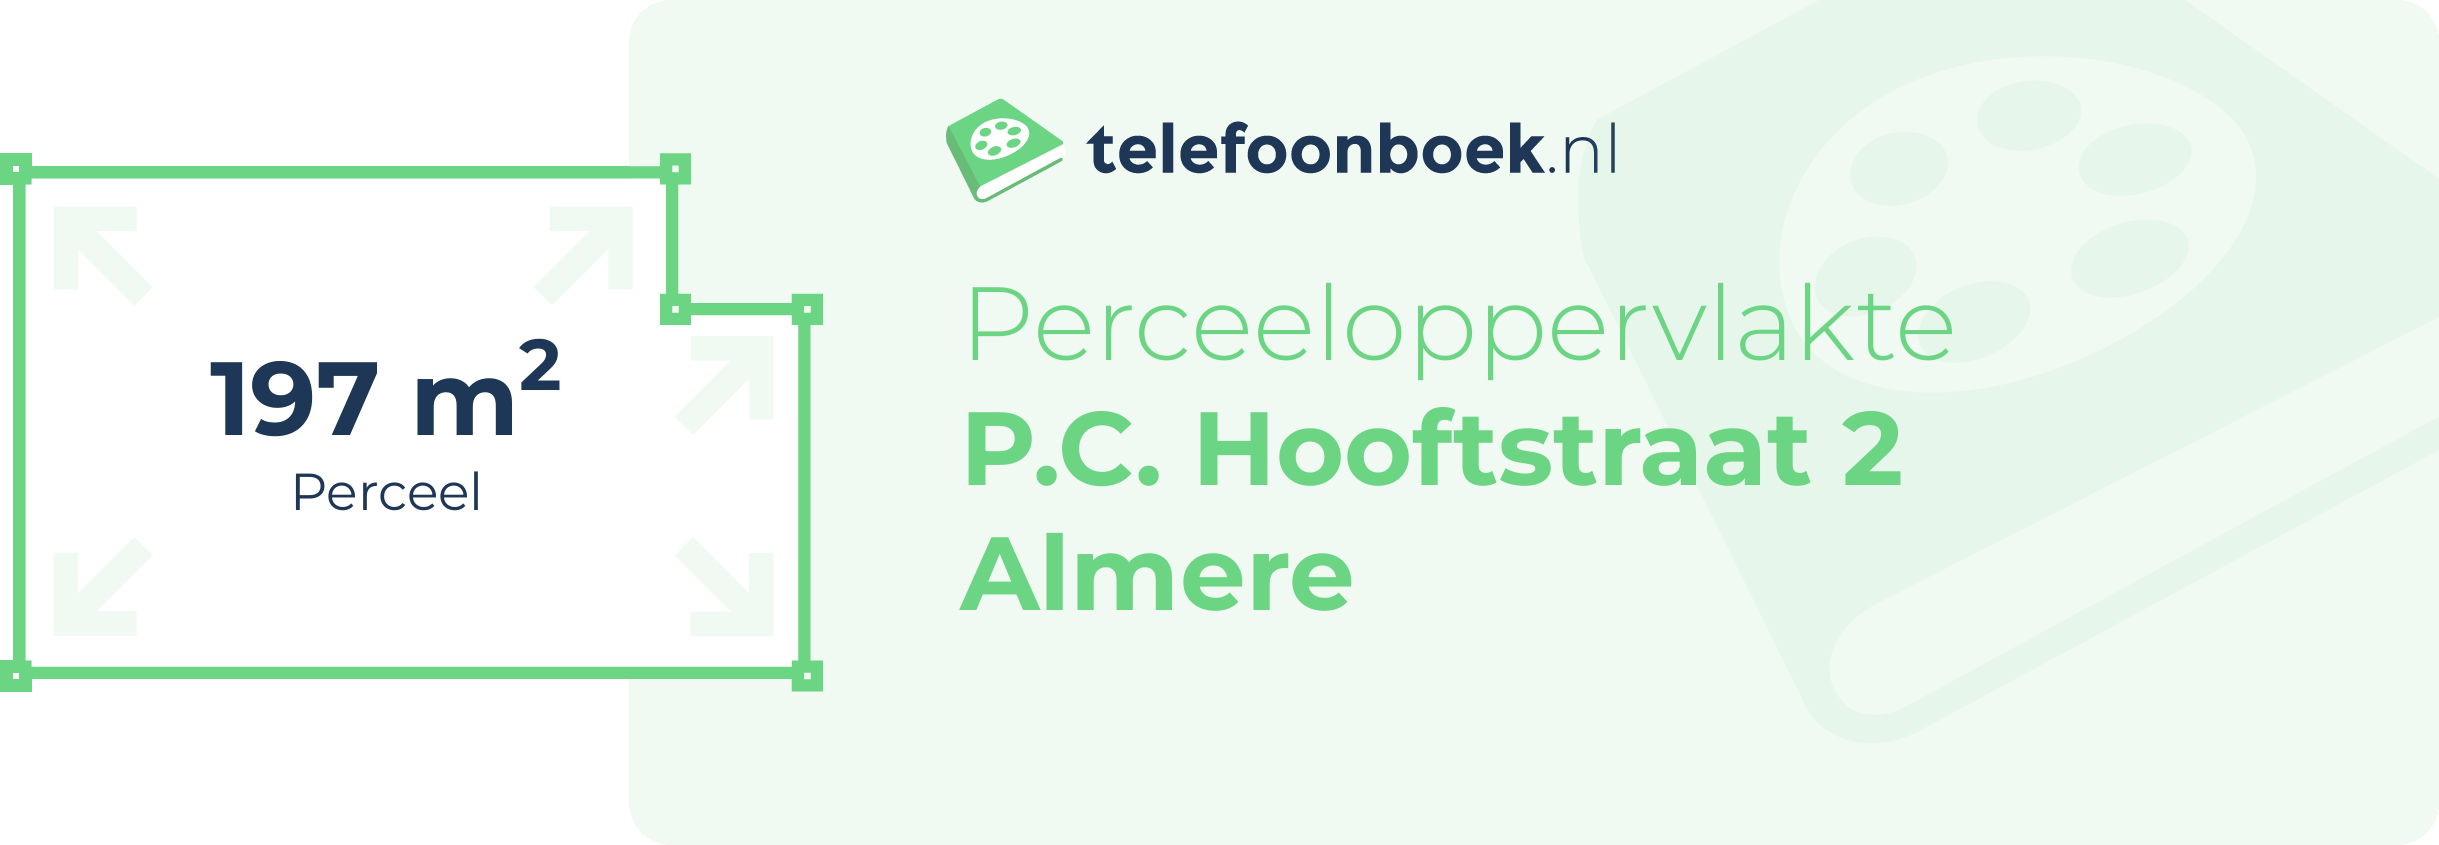 Perceeloppervlakte P.C. Hooftstraat 2 Almere